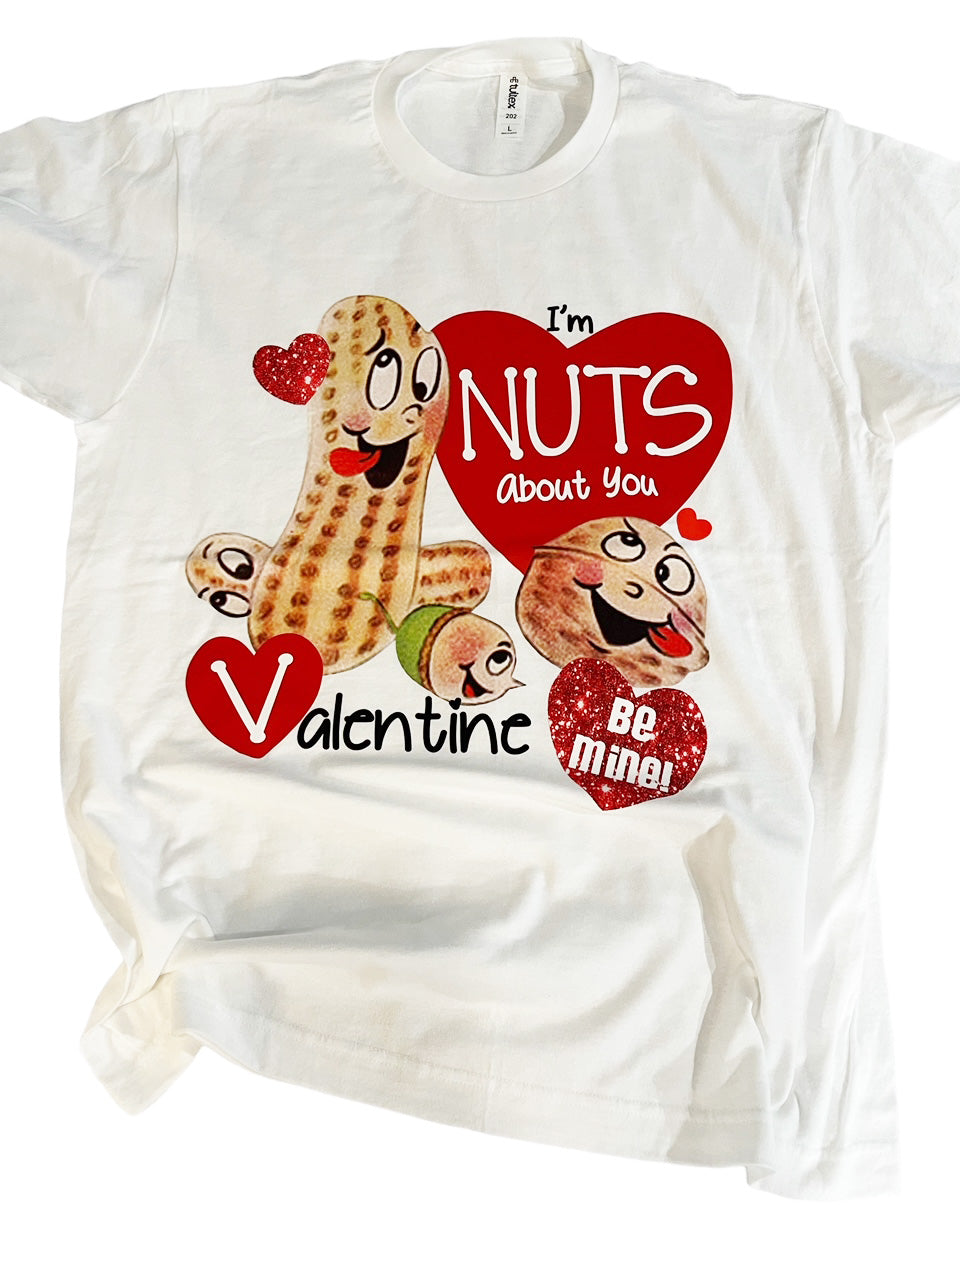 Vintage Valentine Nuts PG Tee